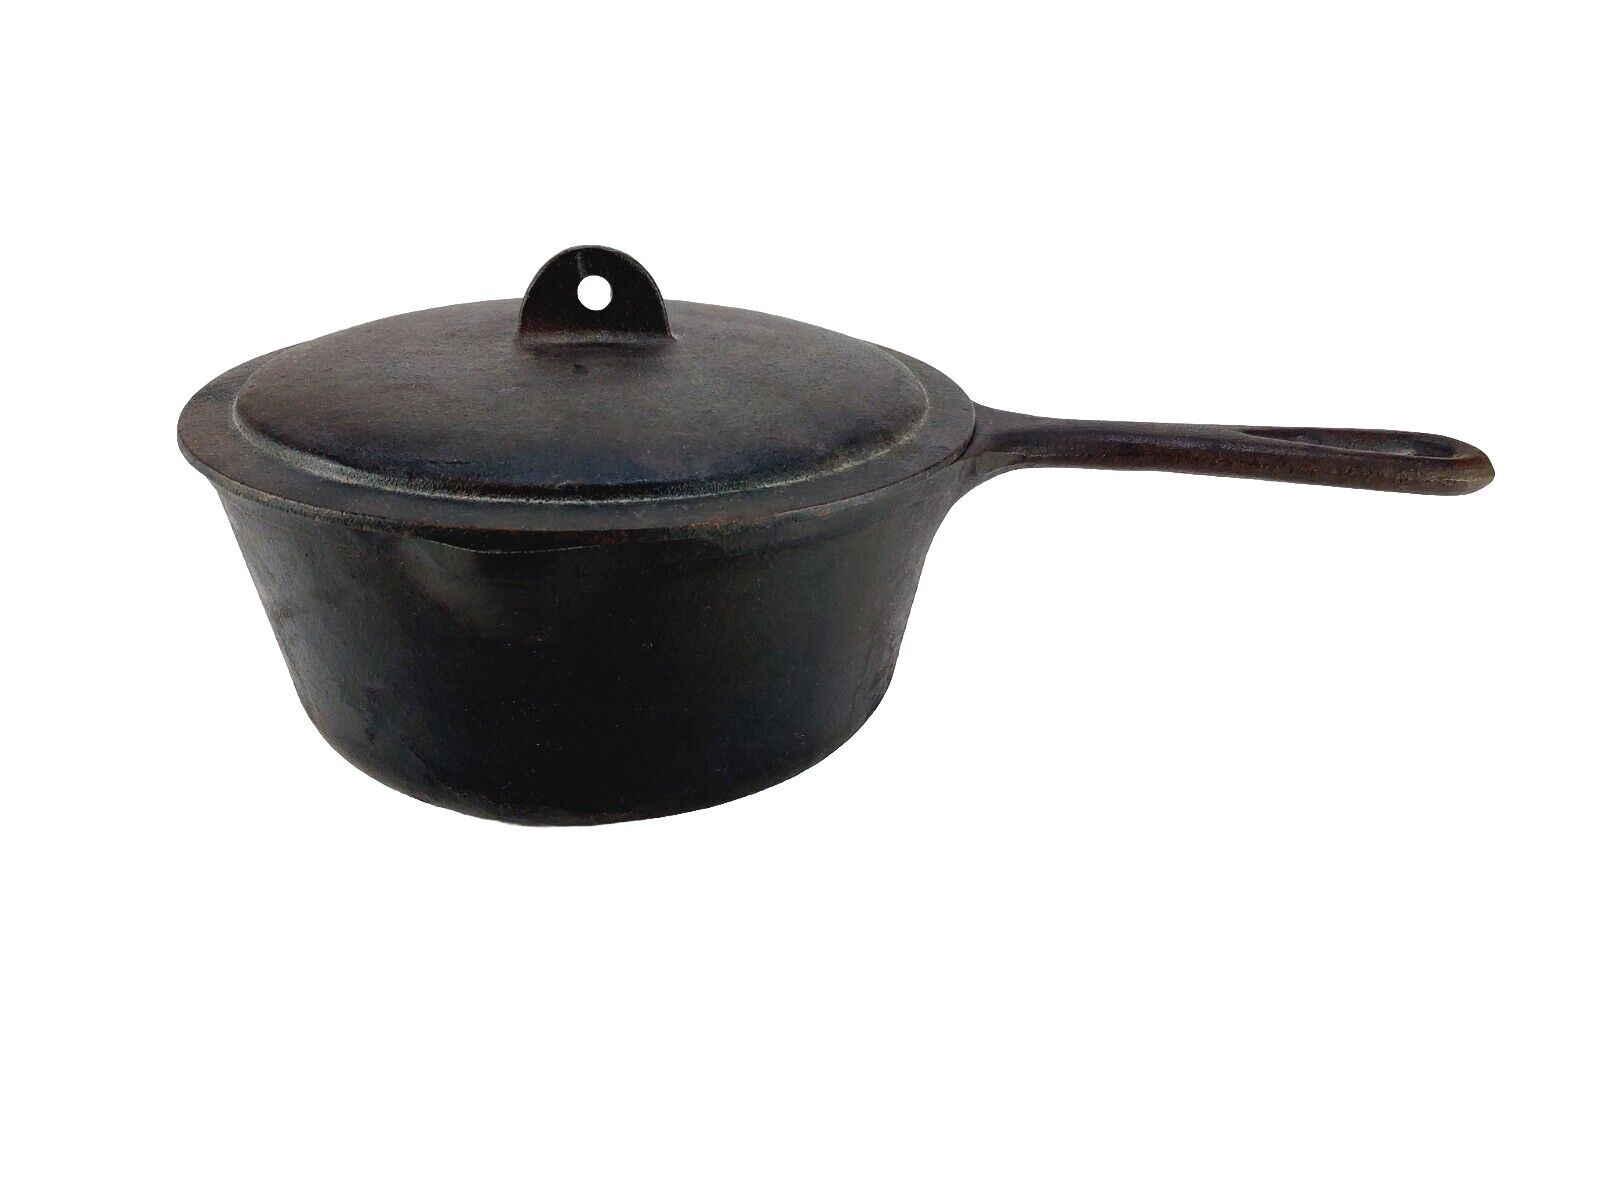 Vintage Birmingham Stove and Range BSR Cast Iron Pot With Lid, 3 Quart Seasoned 